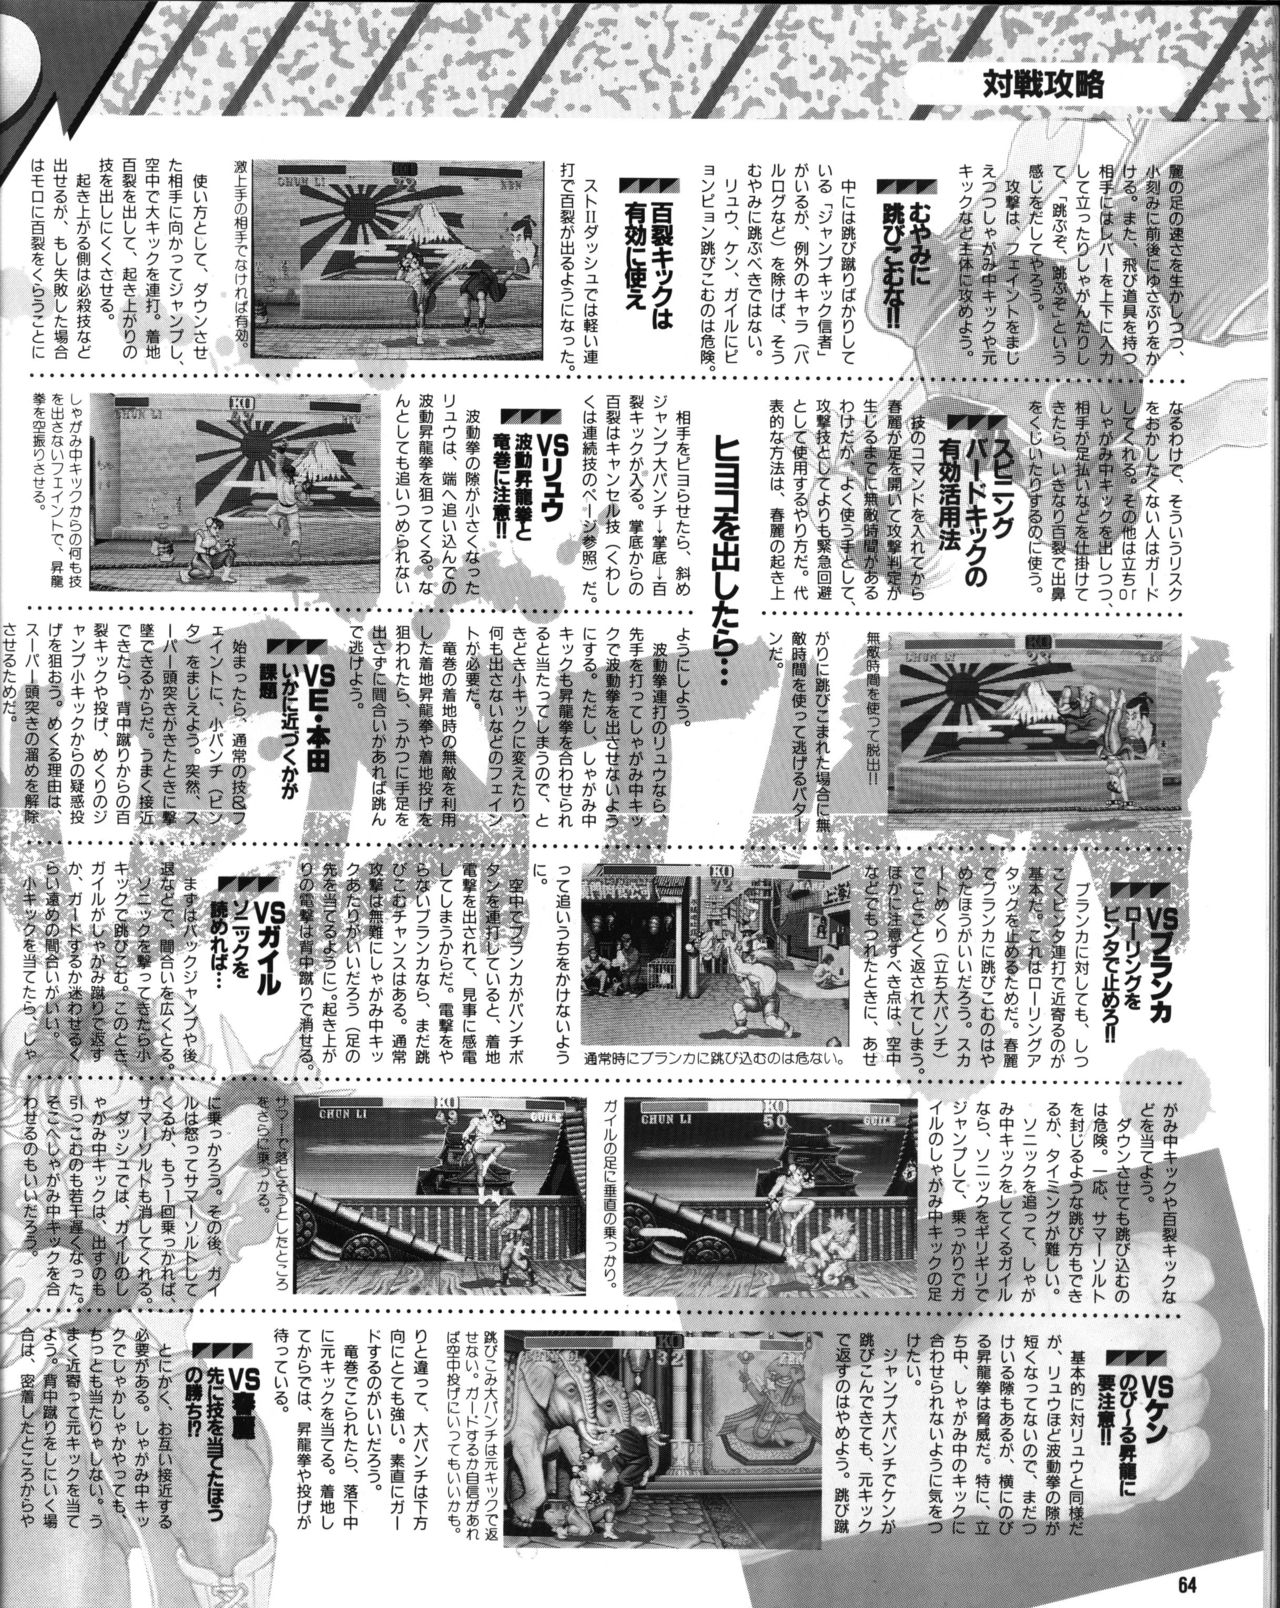 Street Fighter II Dash - Gamest special issue 77 65